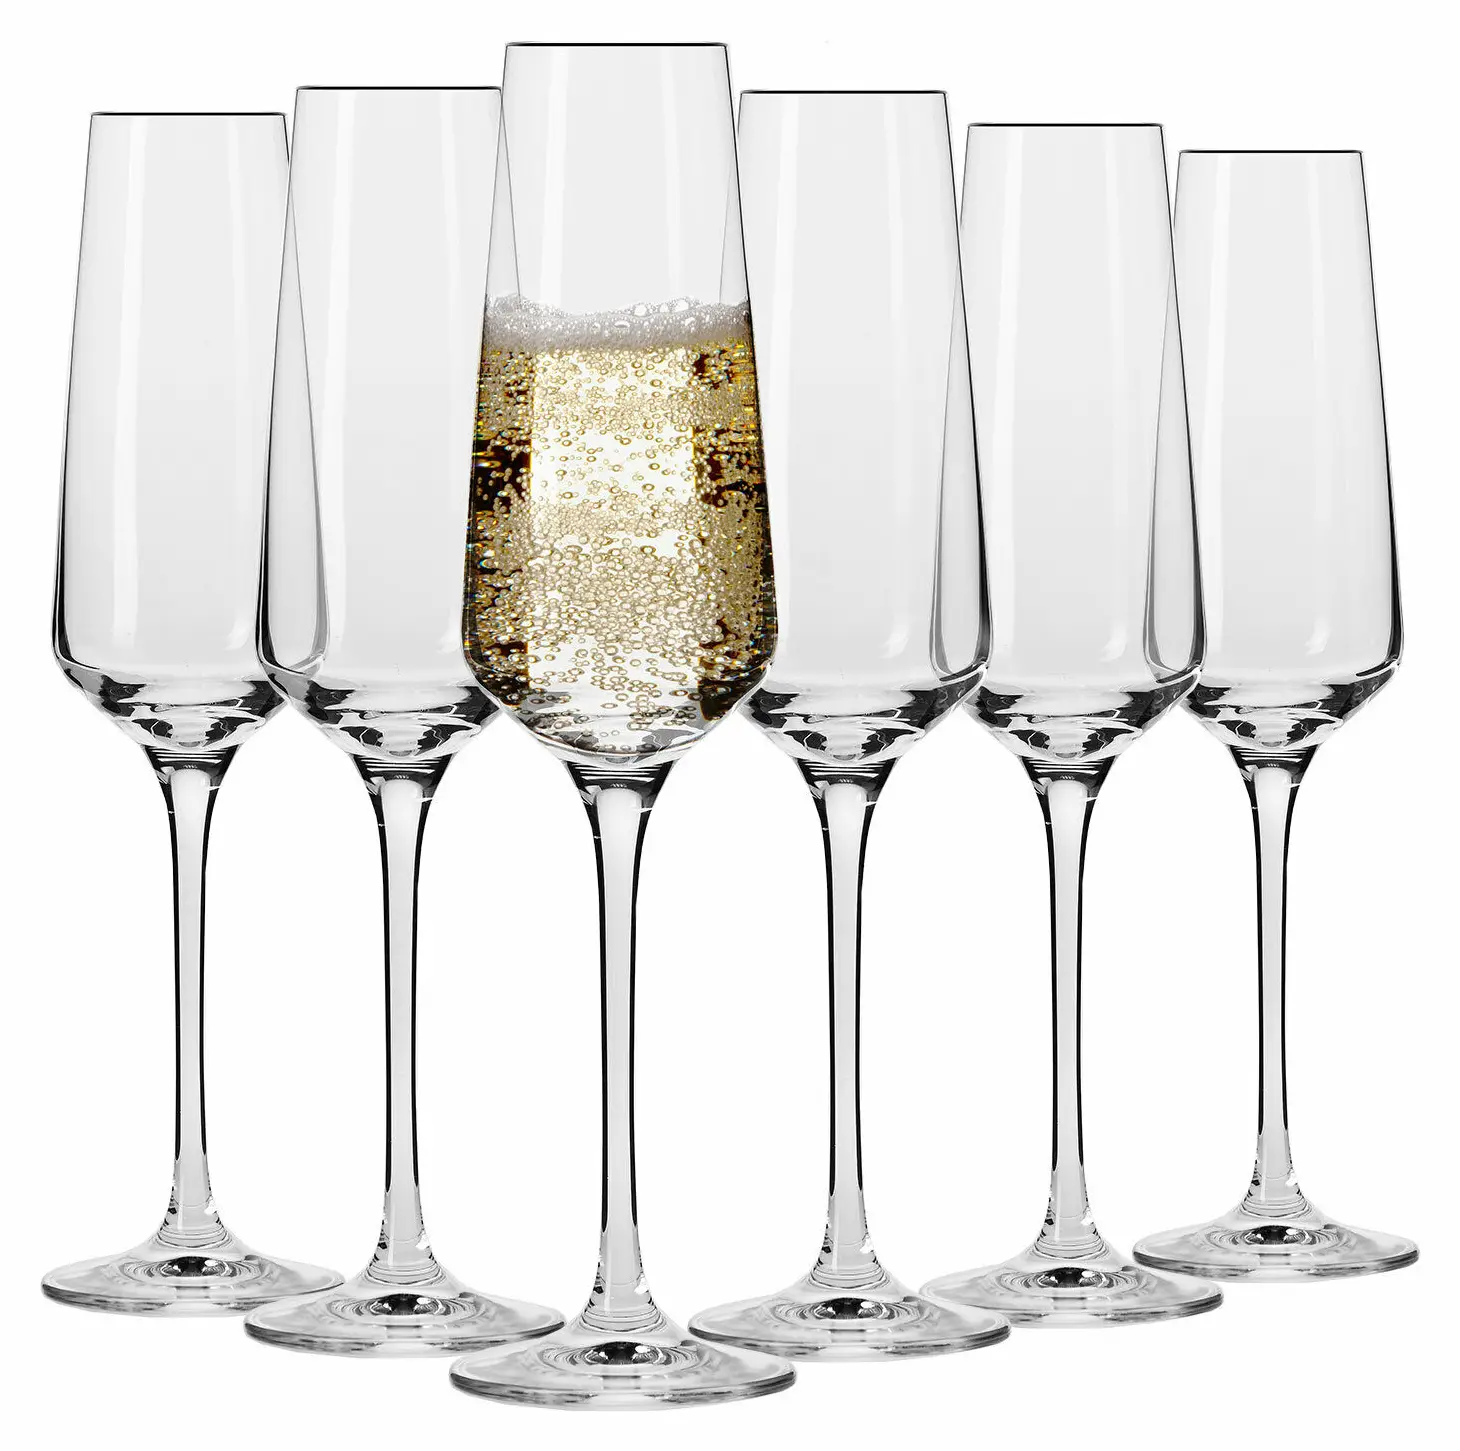 Krosno Avant-Garde Champagnergl盲ser | Sektgläser & Champagnergläser